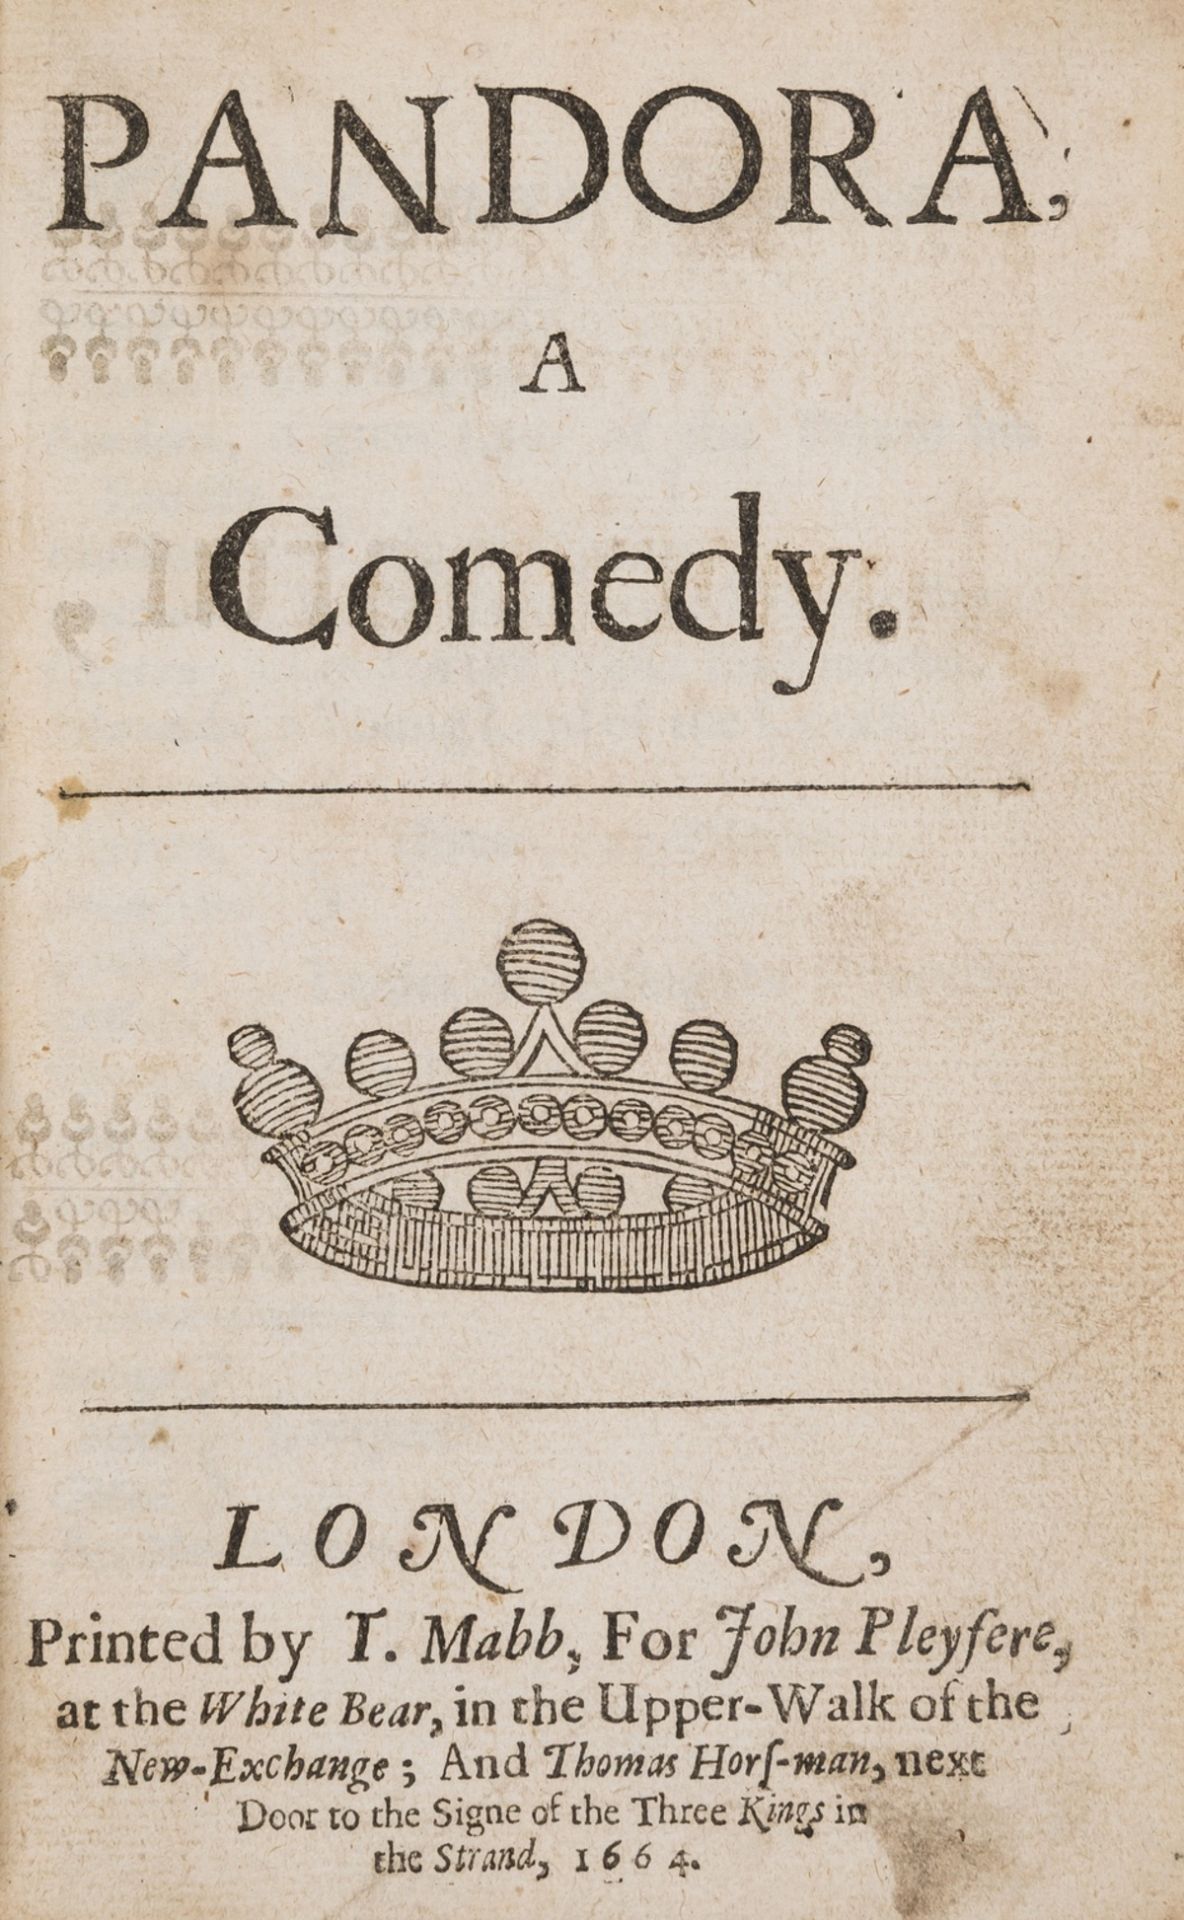 [Killigrew (William)] Pandora, A Comedy, first edition, by T. Mabb, for John Pleyfere, 1664.